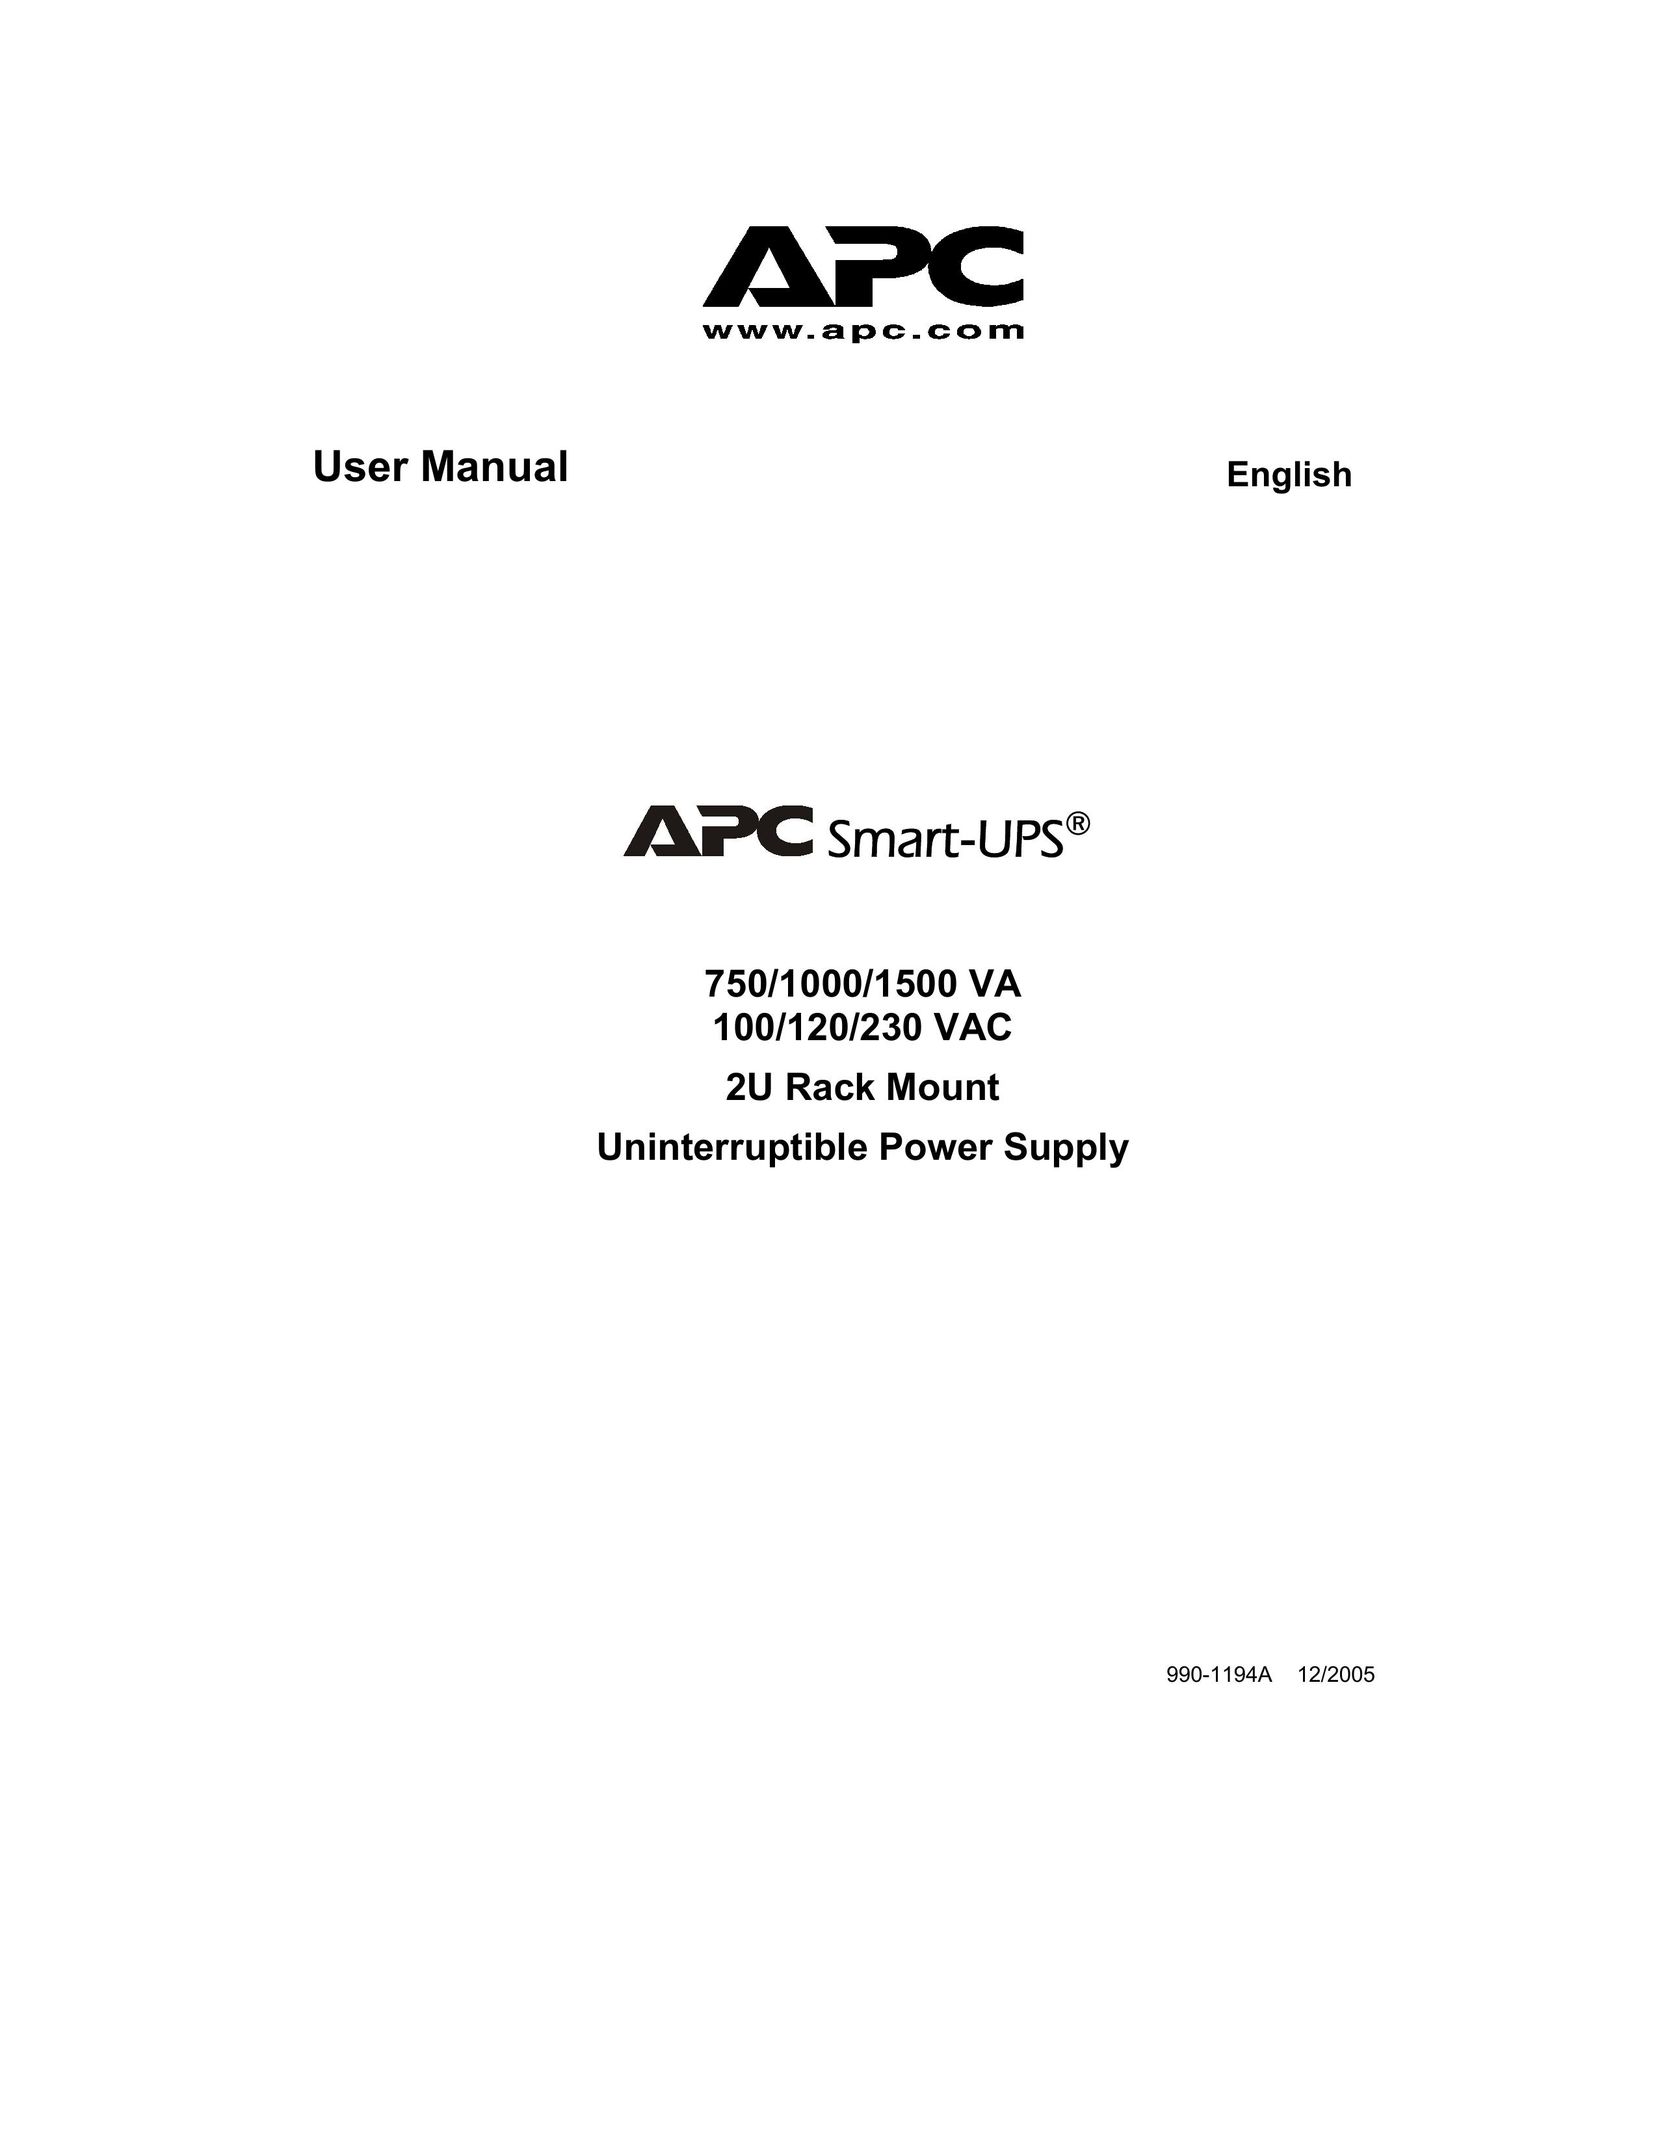 American Power Conversion 230 VAC Power Supply User Manual